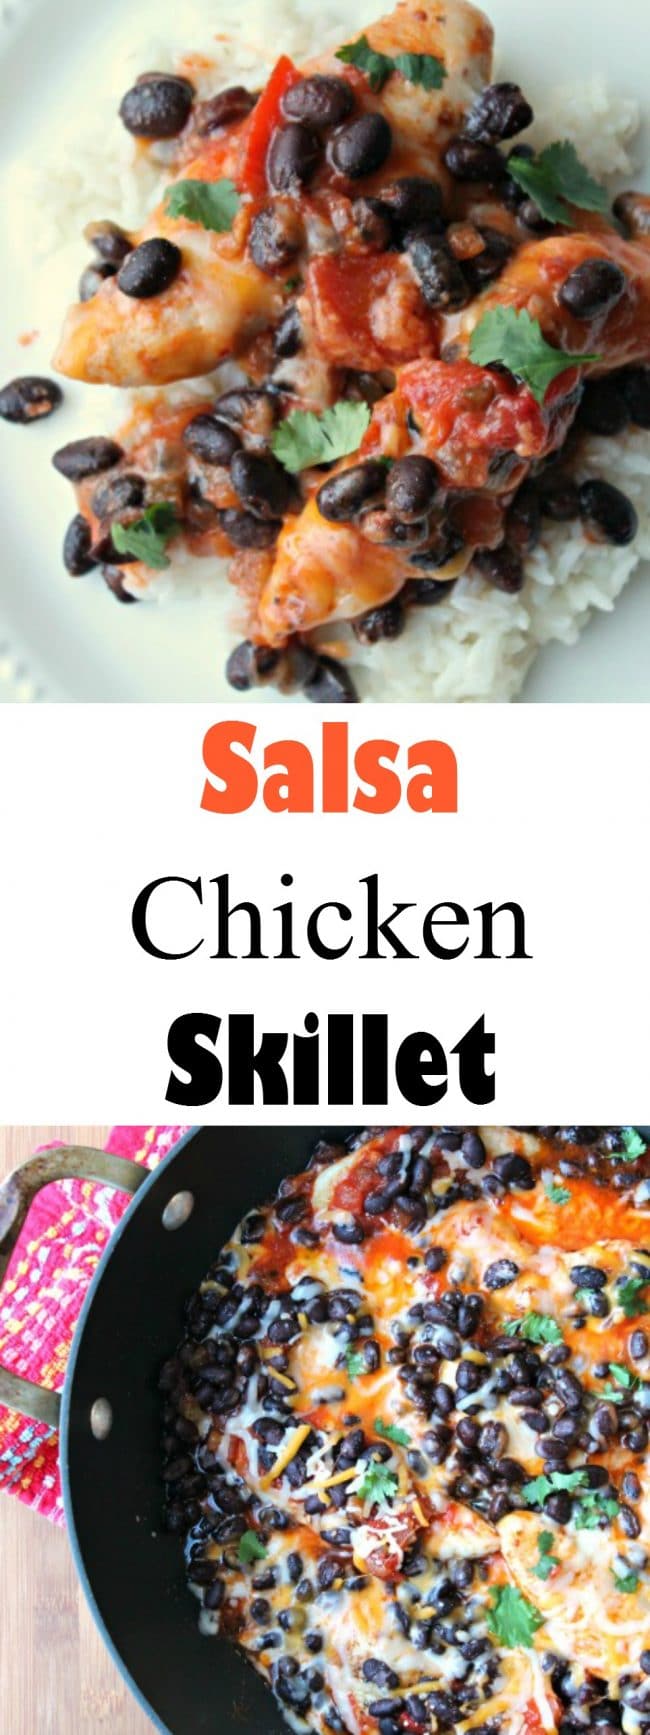 Salsa Chicken Skillet foodyschmoodyblog.com